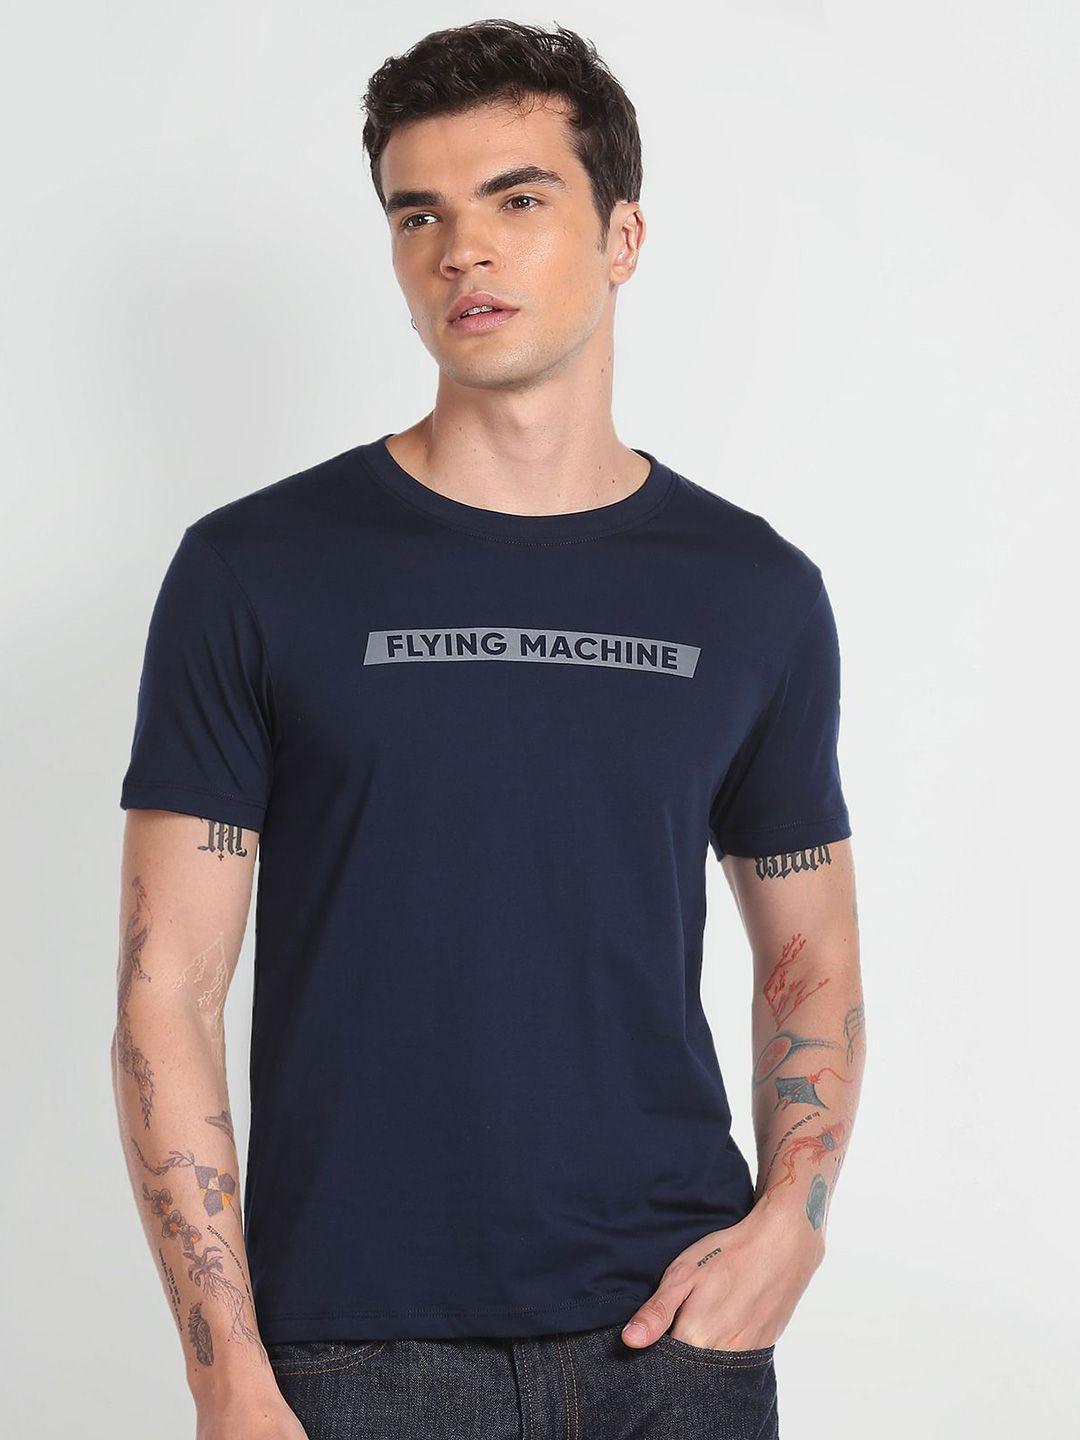 flying machine typography printed short sleeves slim fit t-shirt